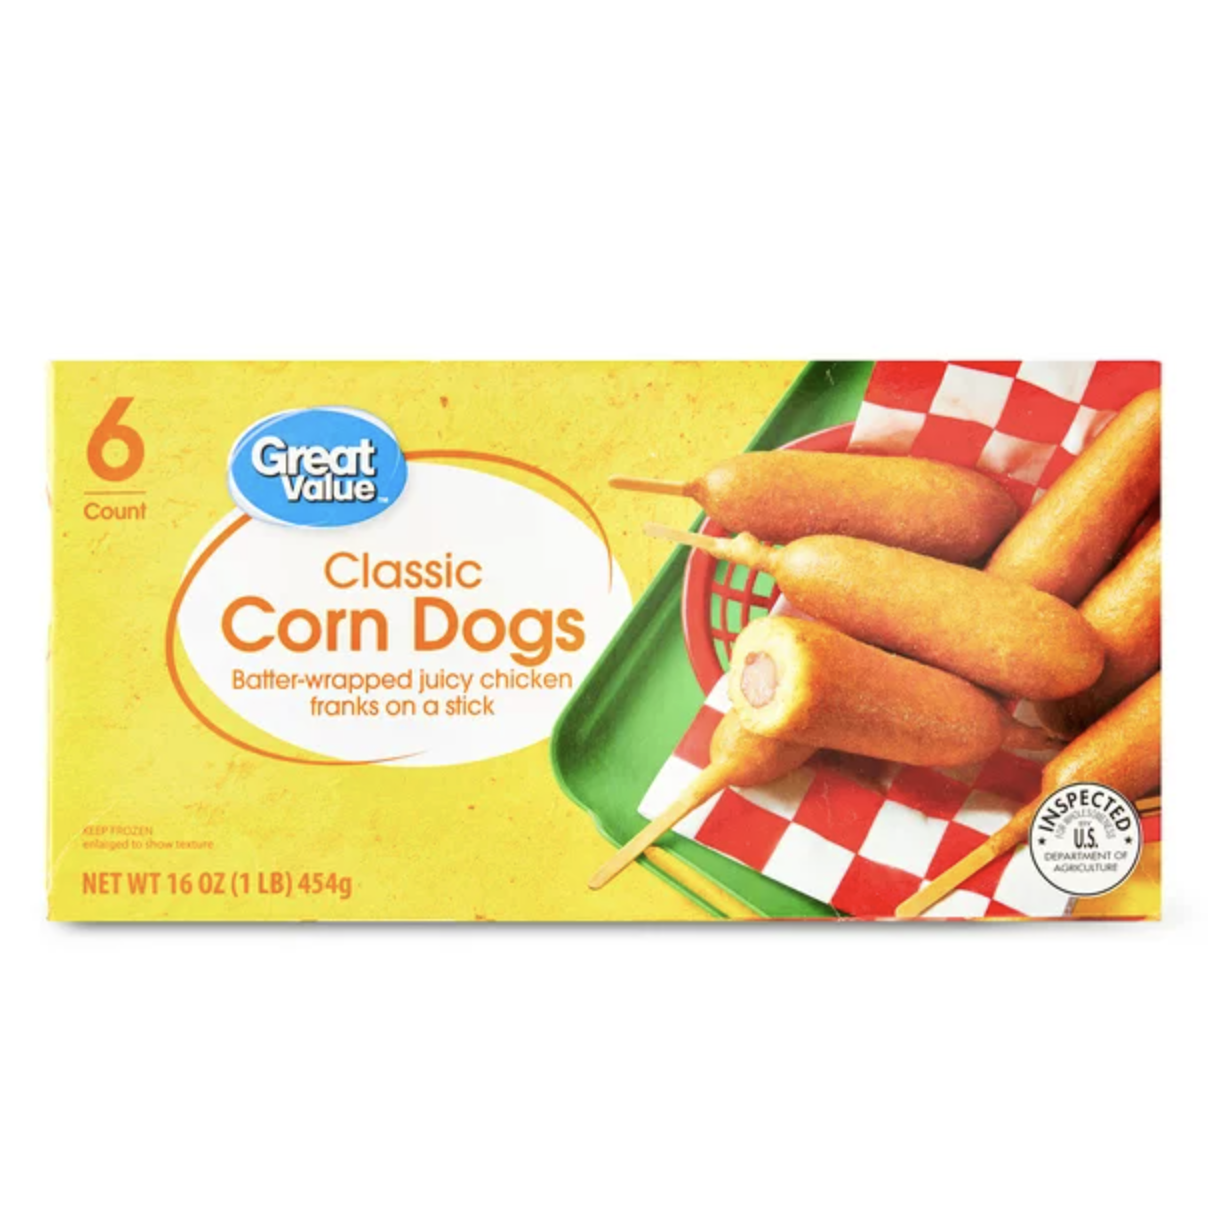 Great Value classic corn dogs